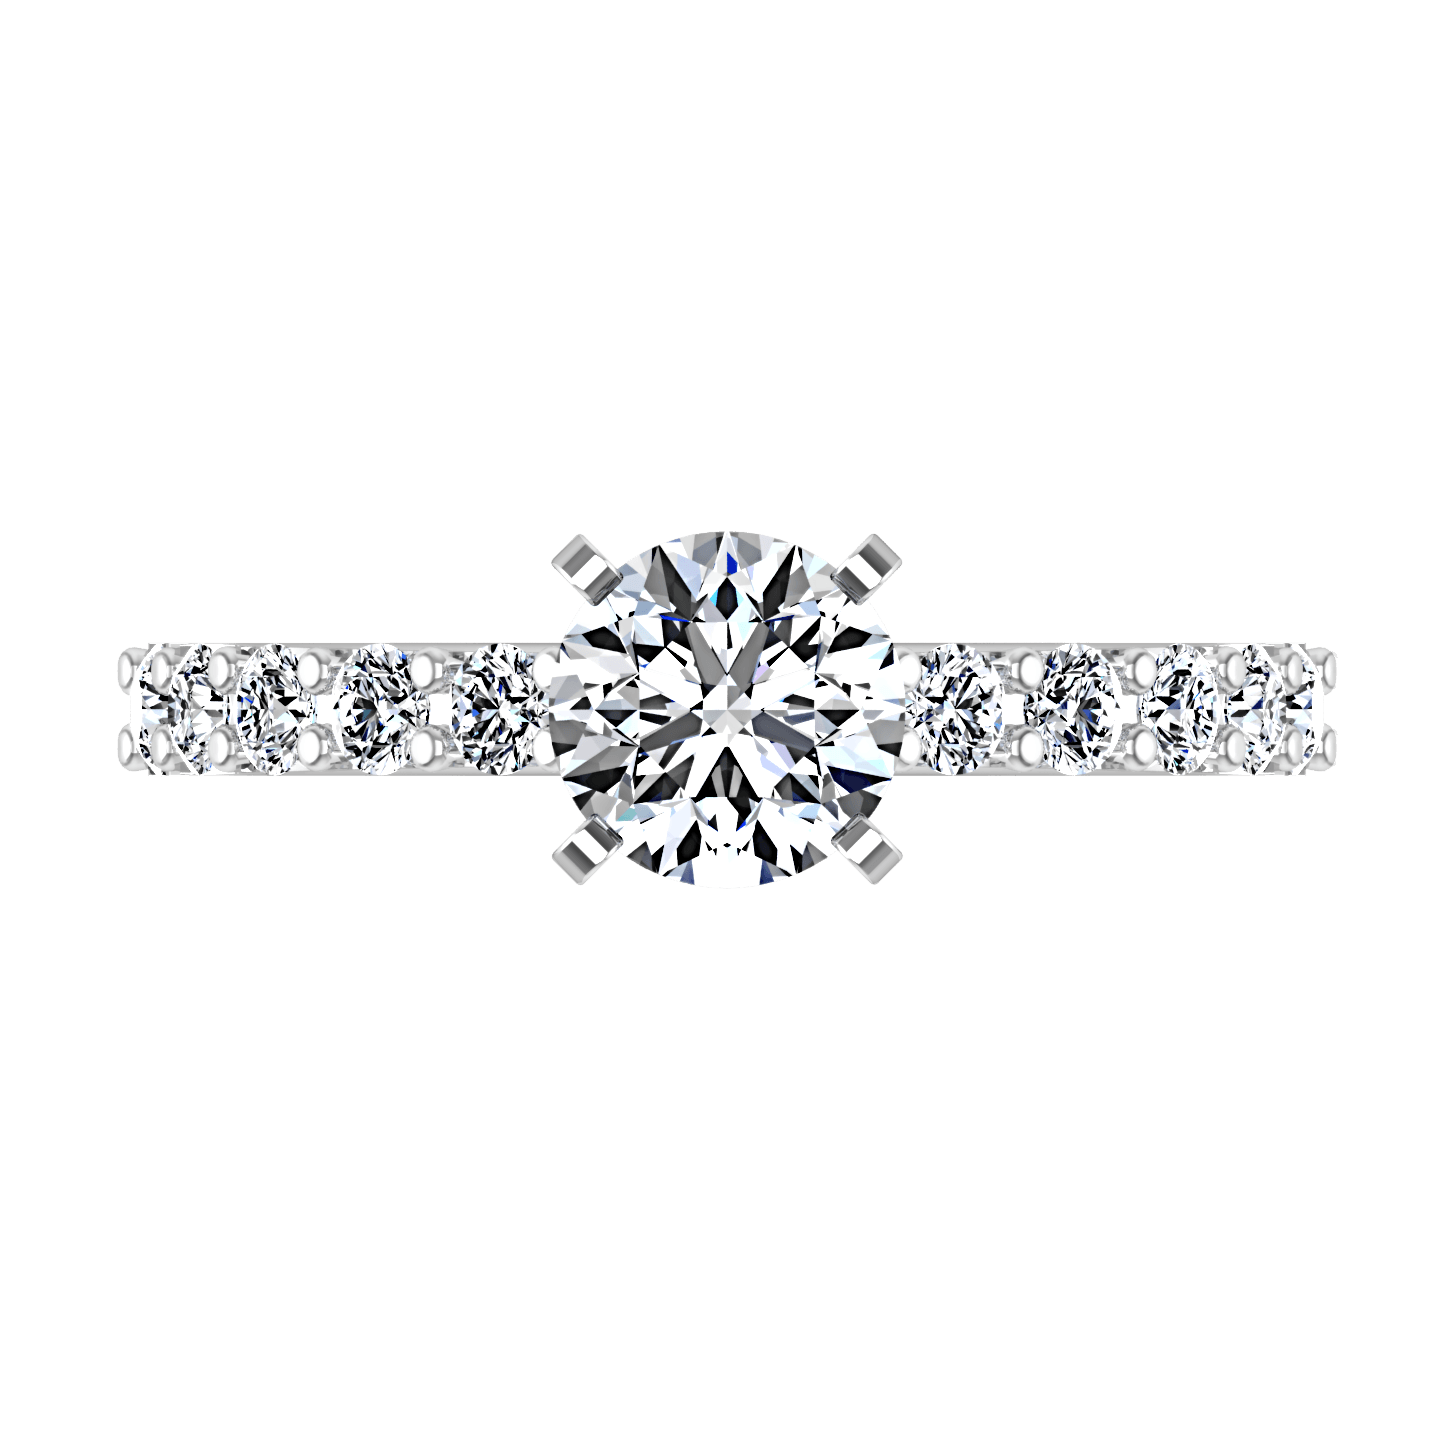 Round Diamond Pave Engagement Ring Cherish 14K White Gold engagement rings imaginediamonds 